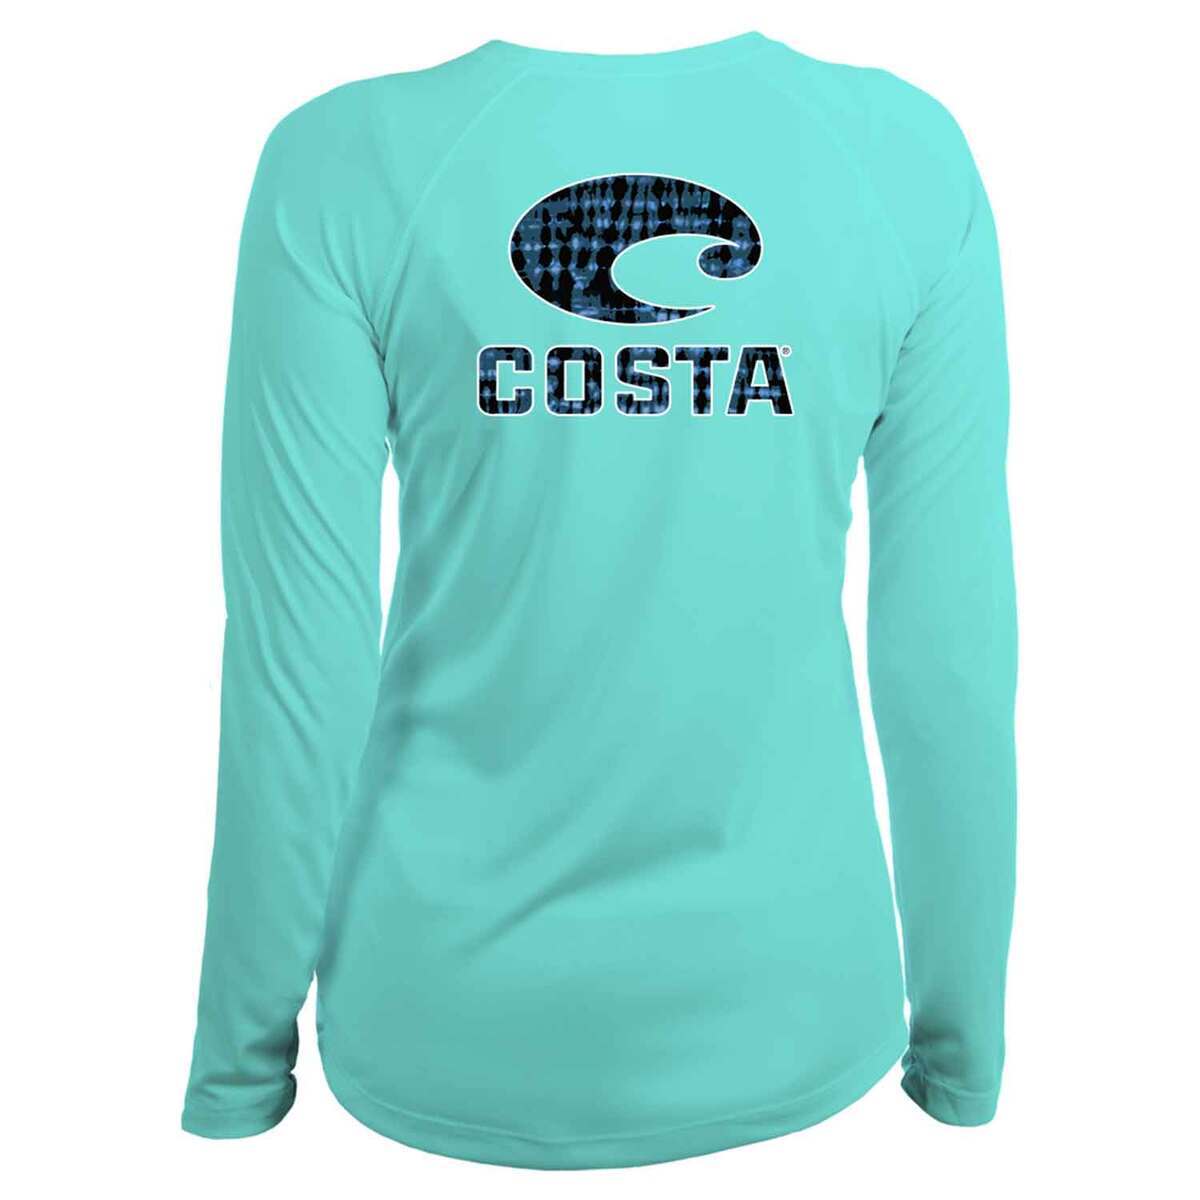 https://www.sportsmans.com/medias/costa-womens-tech-tie-dye-long-sleeve-fishing-shirt-aqua-blue-s-1785974-1.jpg?context=bWFzdGVyfGltYWdlc3w0NjA3N3xpbWFnZS9qcGVnfGFHUmlMMmd3TWk4eE1URTNPVGsyTlRrd05qazNOQzh4TnpnMU9UYzBMVEZmWW1GelpTMWpiMjUyWlhKemFXOXVSbTl5YldGMFh6RXlNREF0WTI5dWRtVnljMmx2YmtadmNtMWhkQXxhNDU2NDdjNzk3NDE3NGNhNjliMjczYjMyNDc3ZDVkNjJkZTRjZTFhYzkyYmUxZmIxZTE3ZWVmYjBmZDVkZTRm